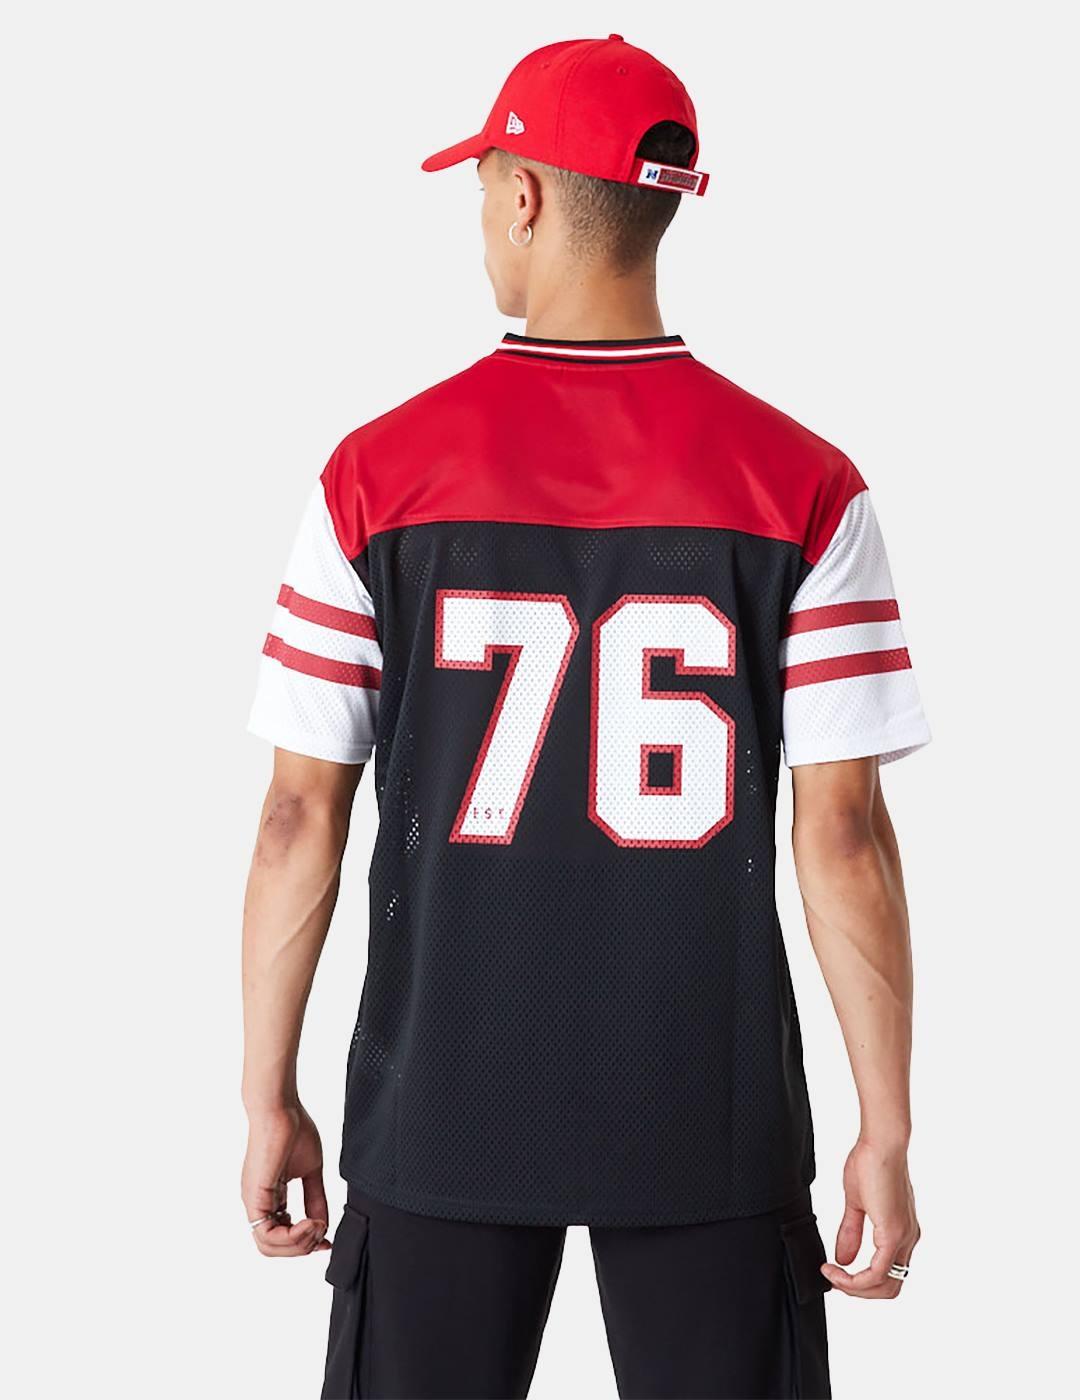 Camiseta New Era NFL Buccaneers Negro